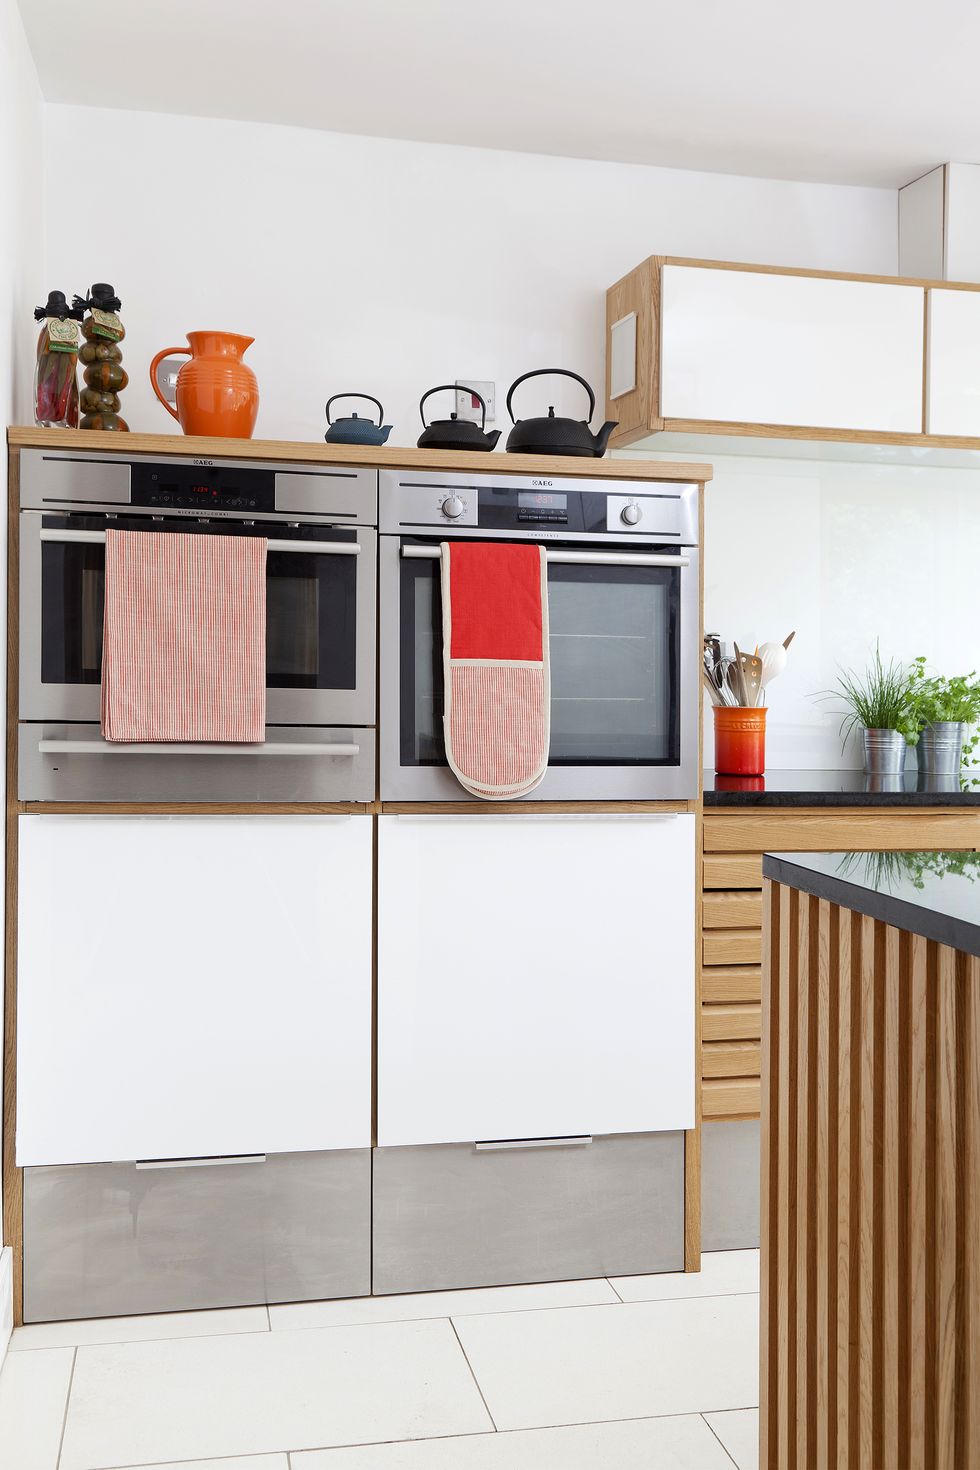 Contemporary kitchen renovation in Waddingham using retro Danish styling and an orange Smeg fridge